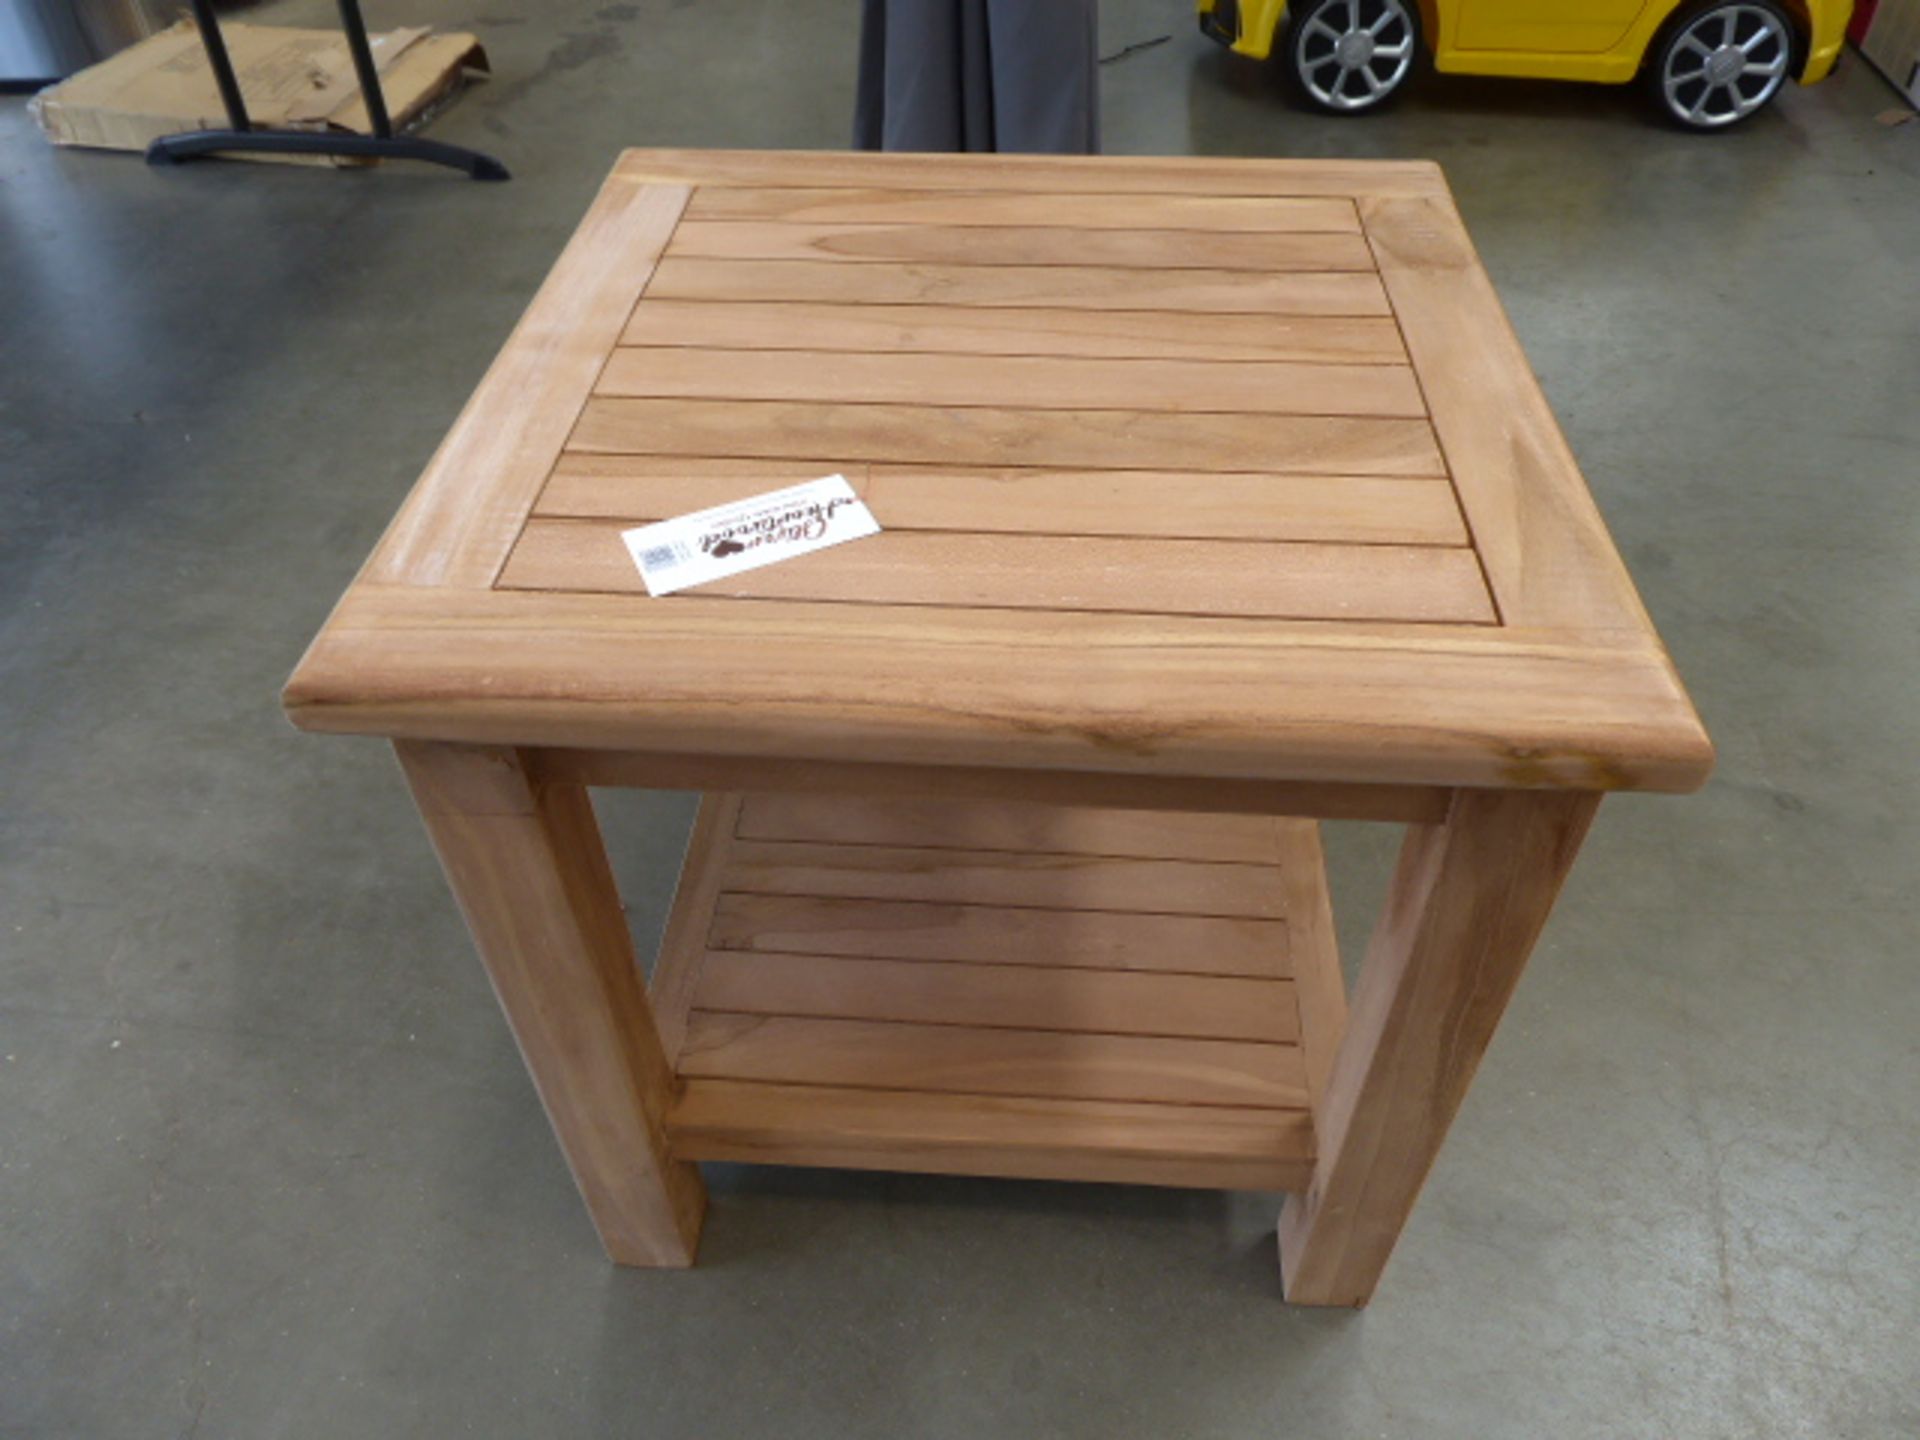 Boxed small 50 x 50 x 50 hardwood garden table